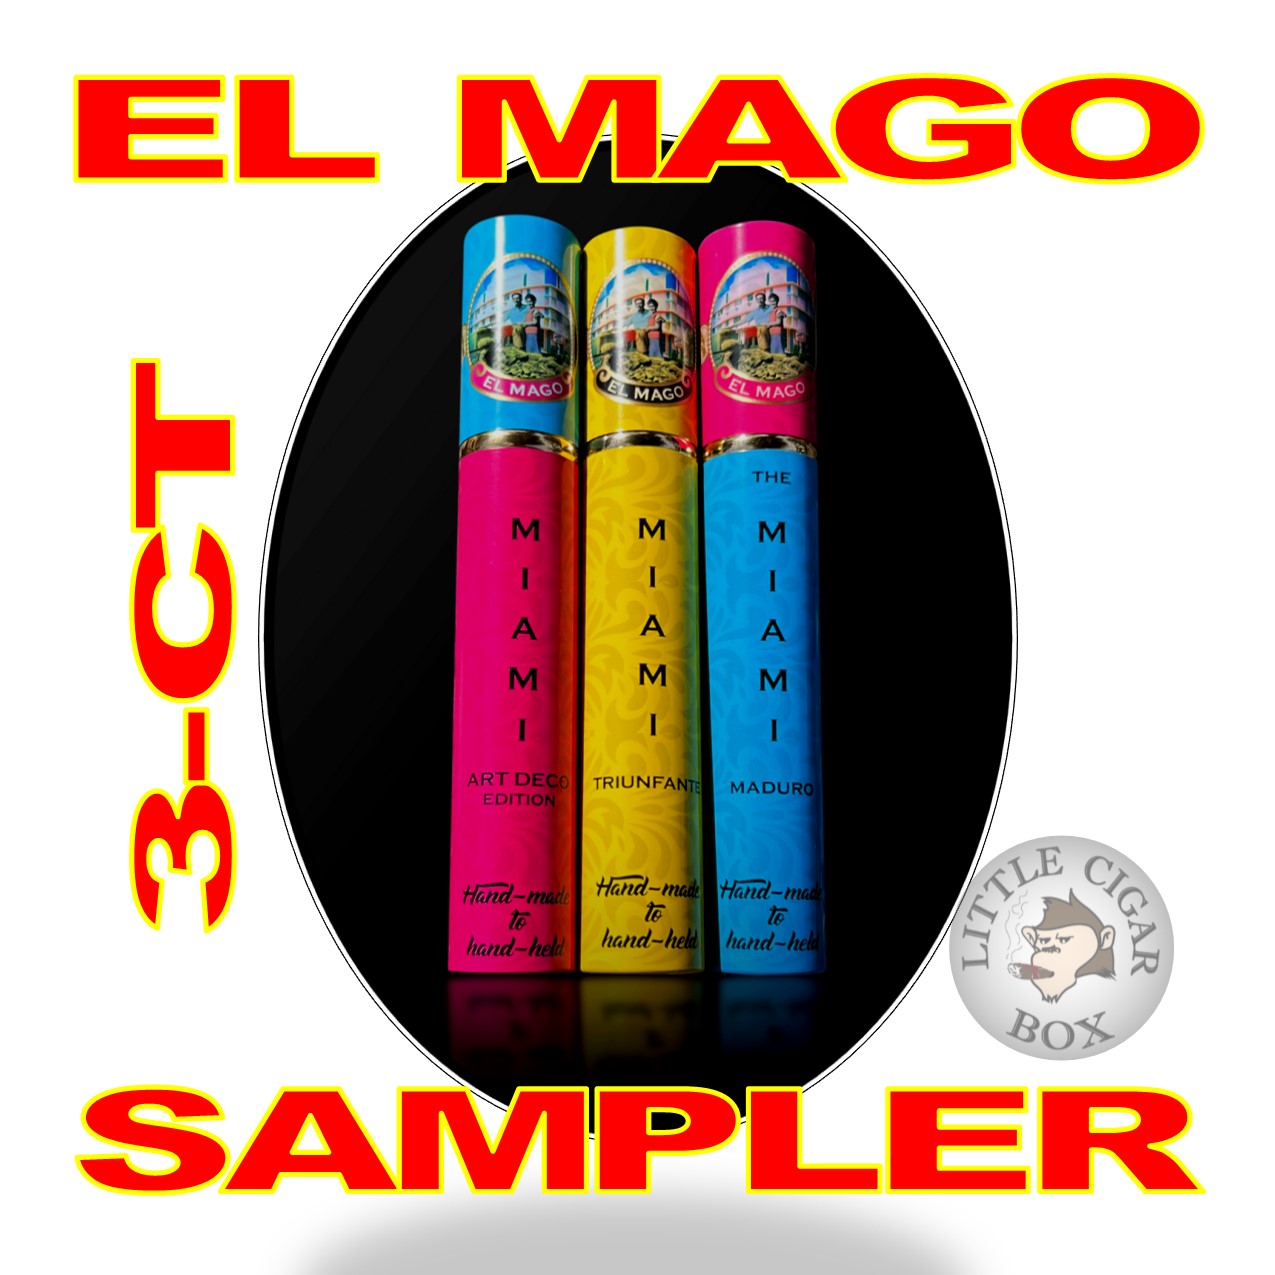 EL MAGO MIAMI MAGIC 3-CT SAMPLER PACK